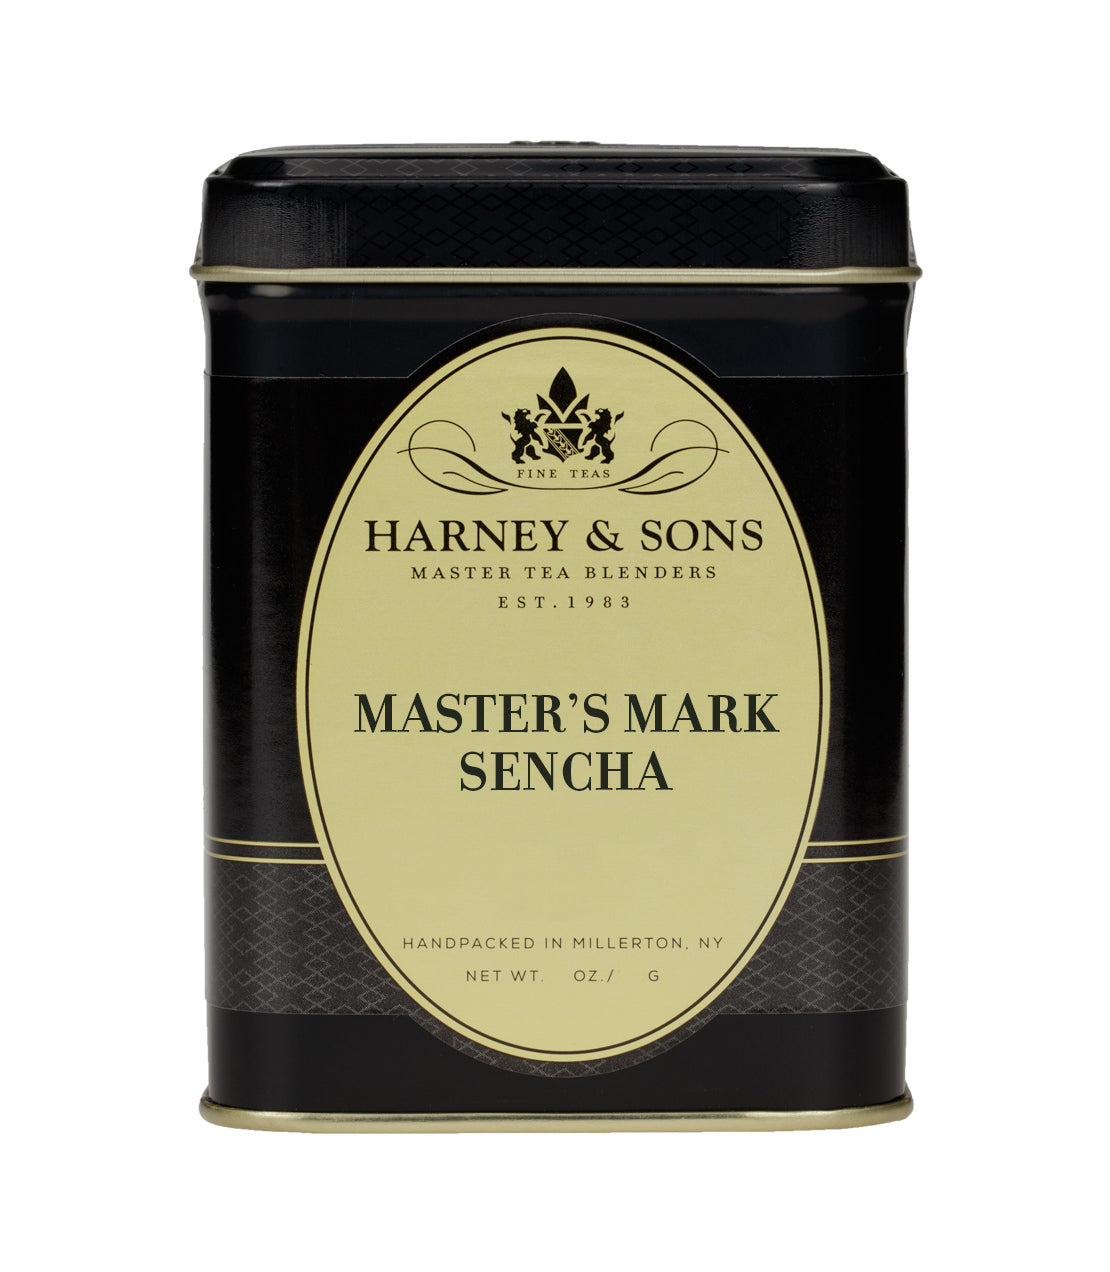 Master's Mark Sencha - Loose 2 oz. Tin - Harney & Sons Fine Teas